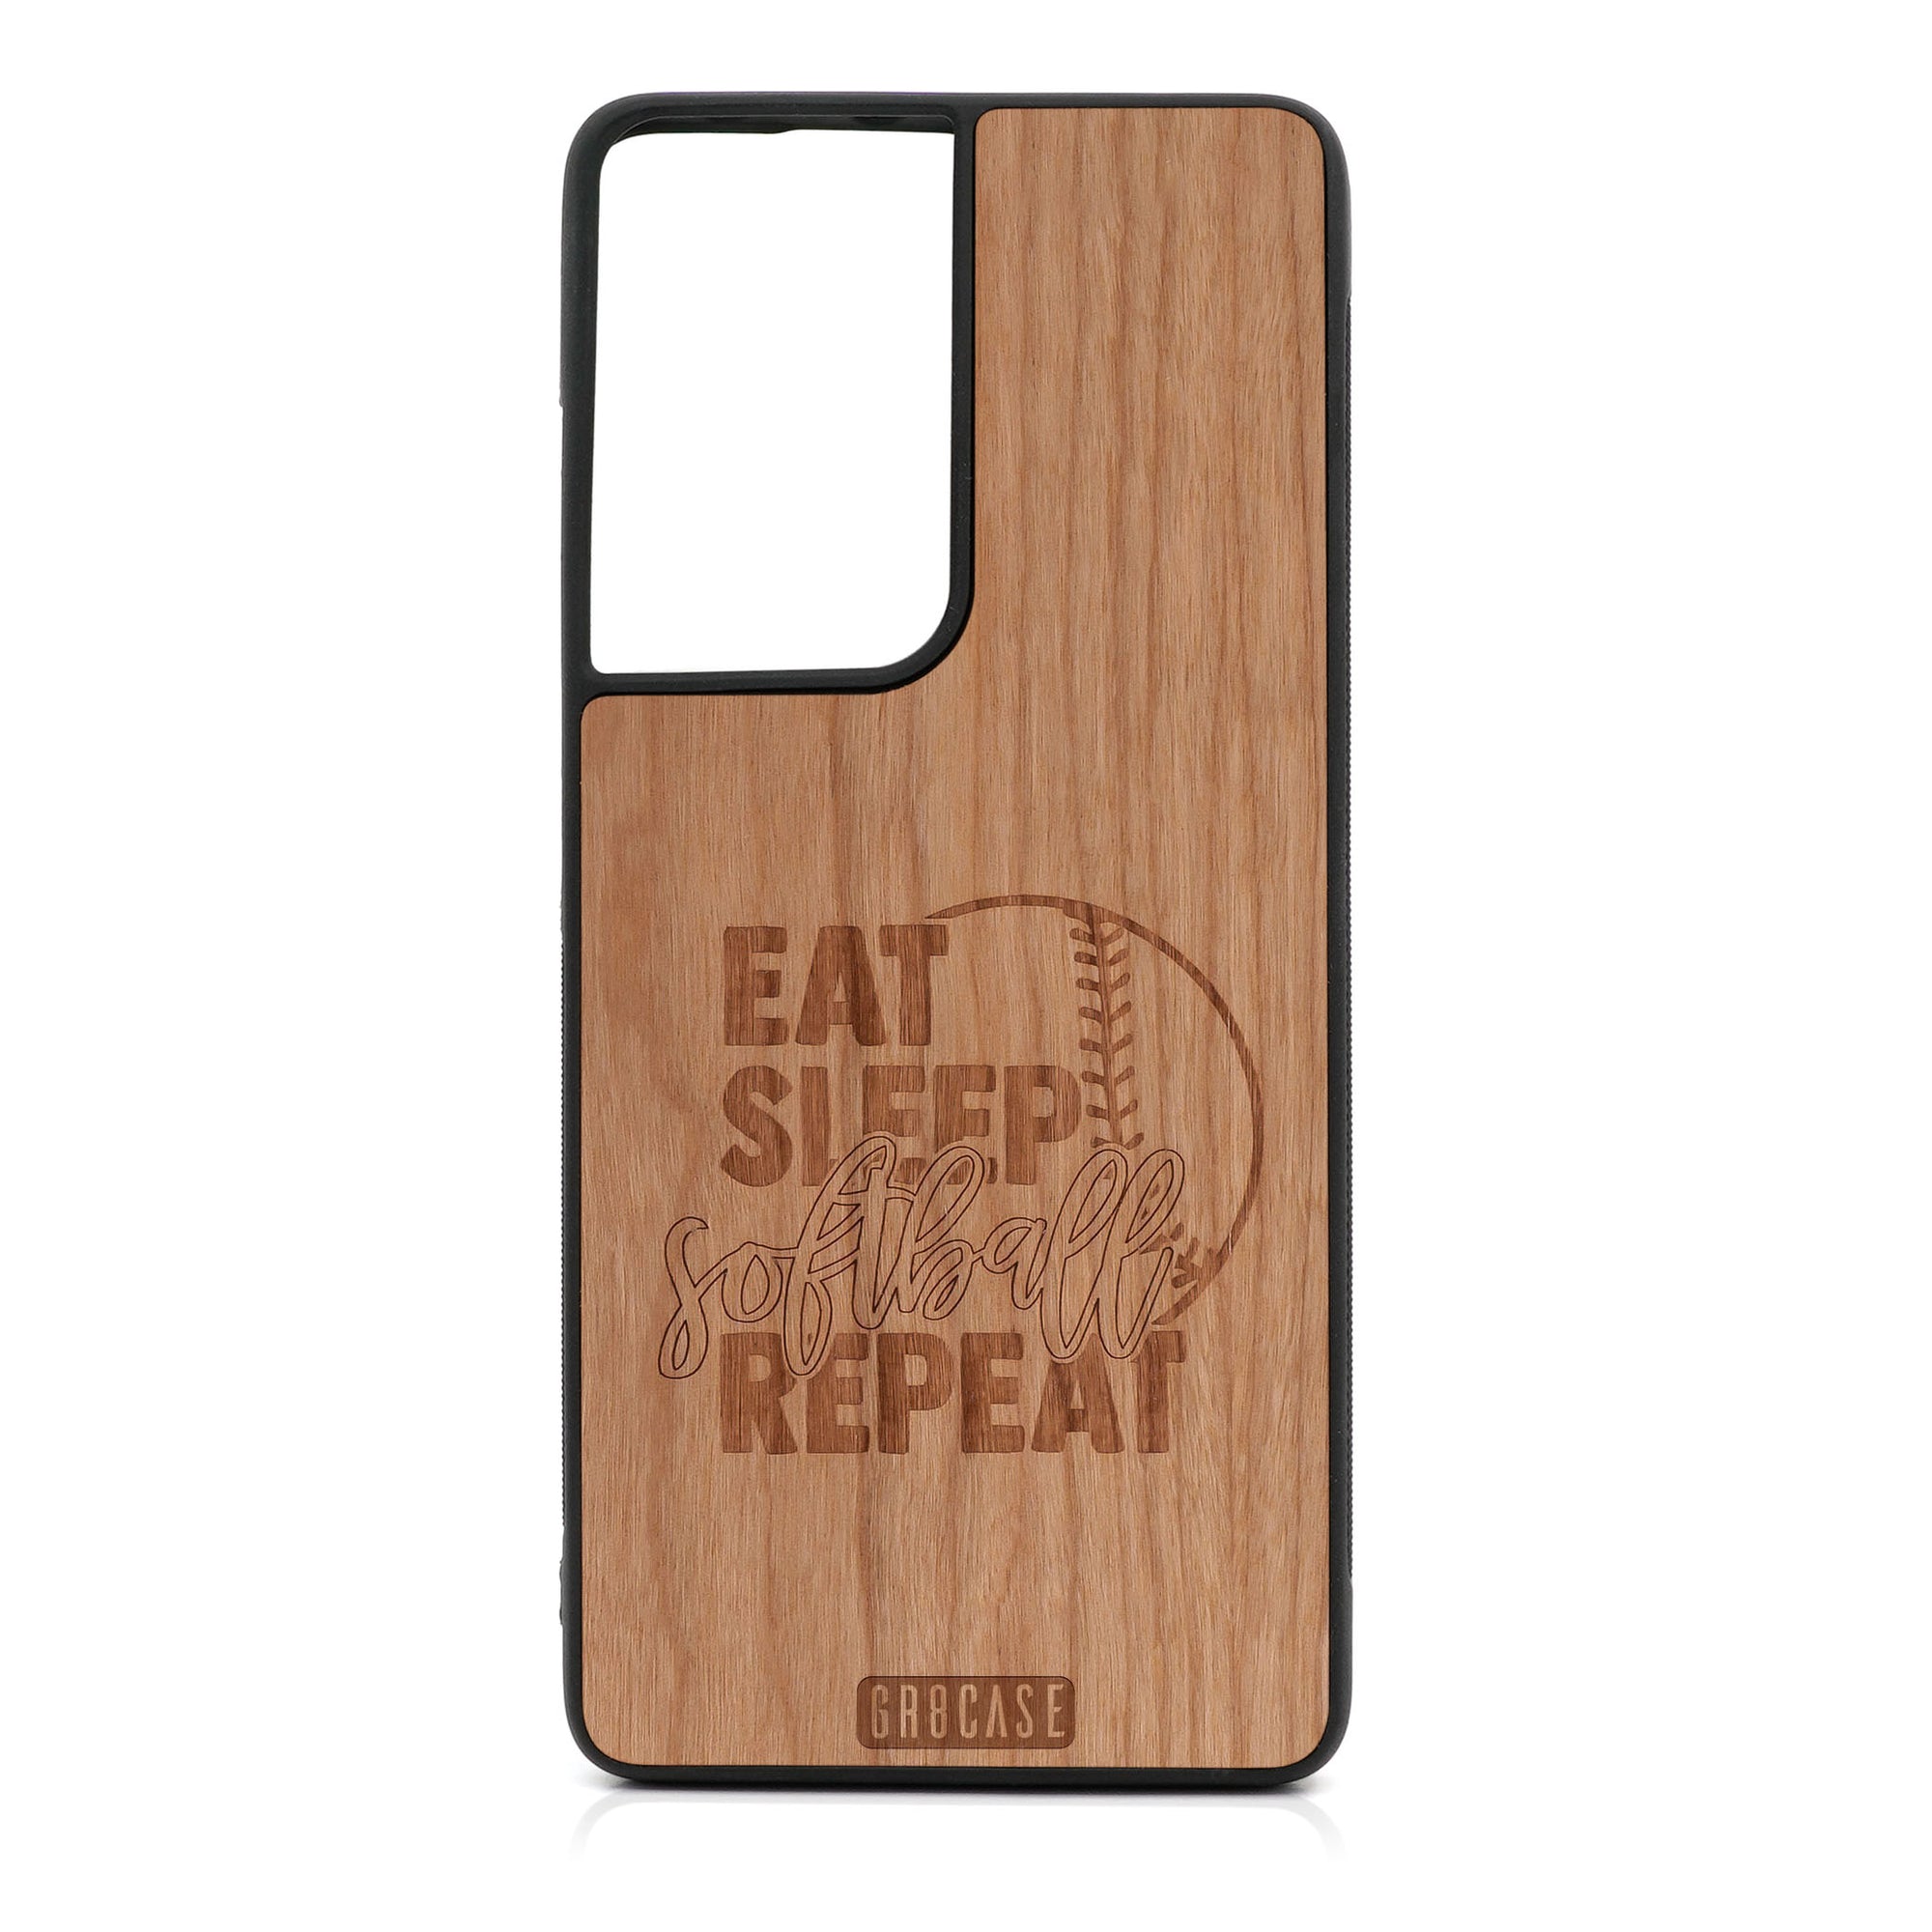 Eat Sleep Softball Repeat Design Wood Case For Samsung Galaxy S21 Ultra 5G